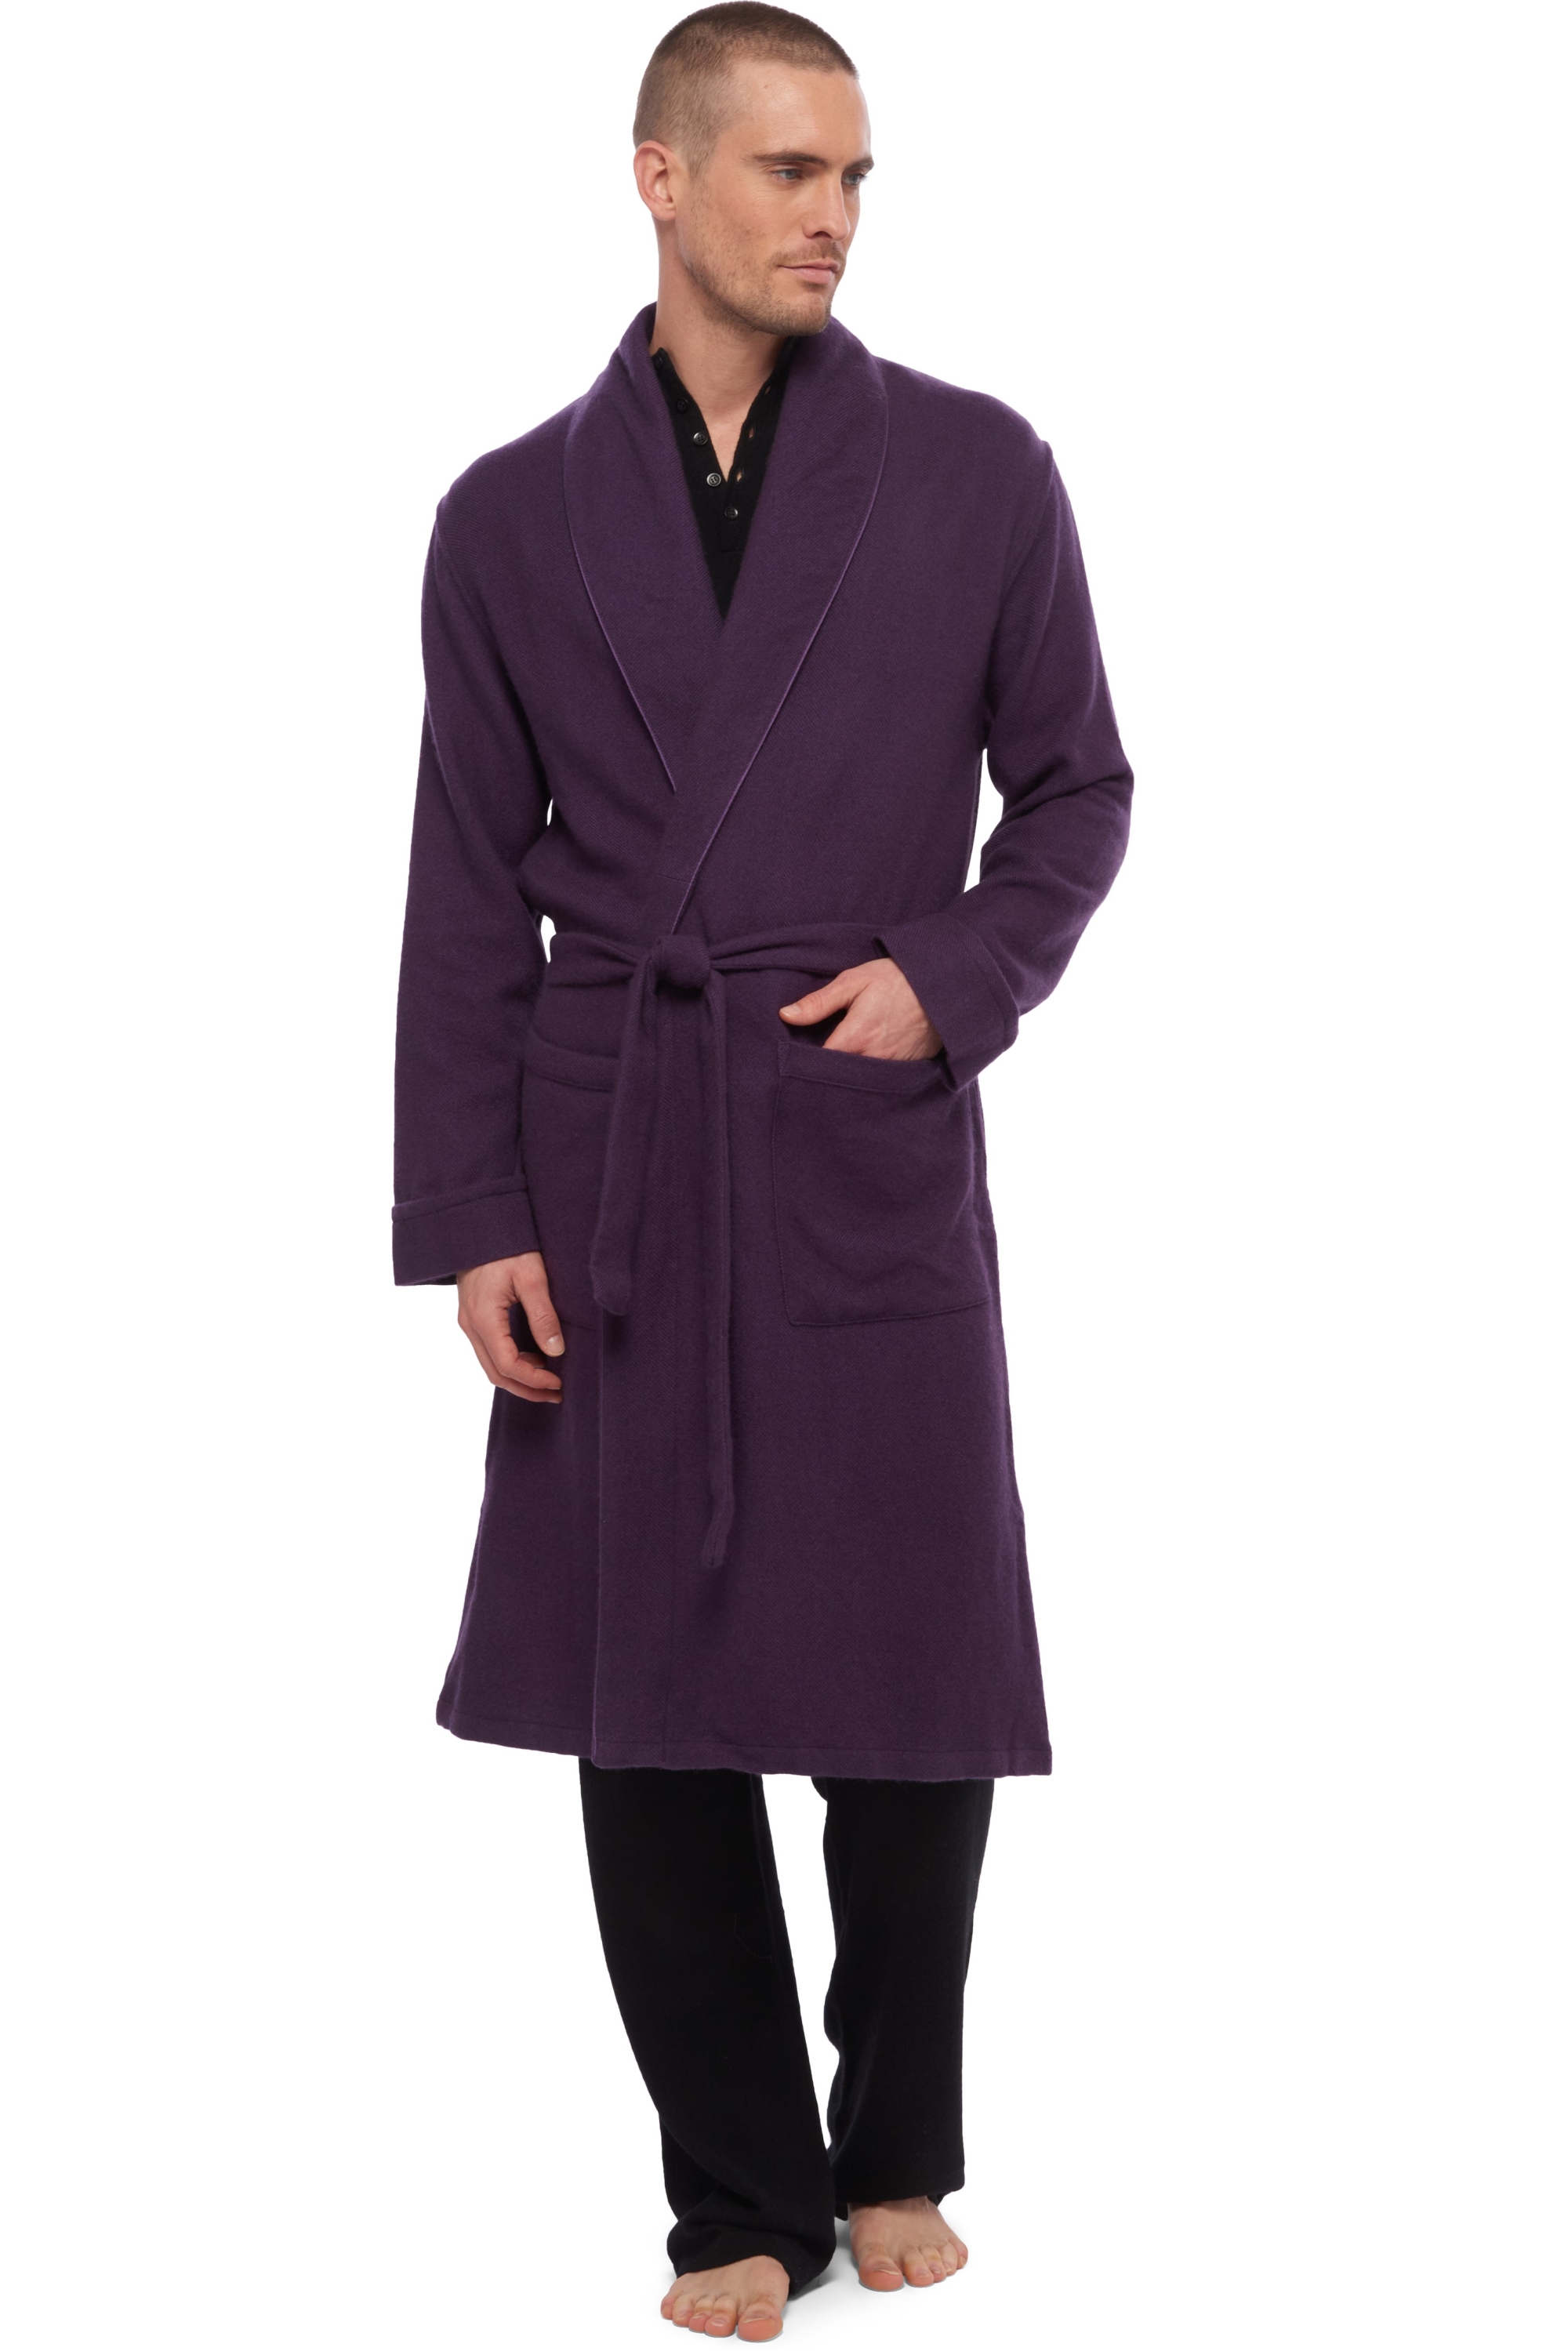 Cashmere men dressing gown working purple violet s2